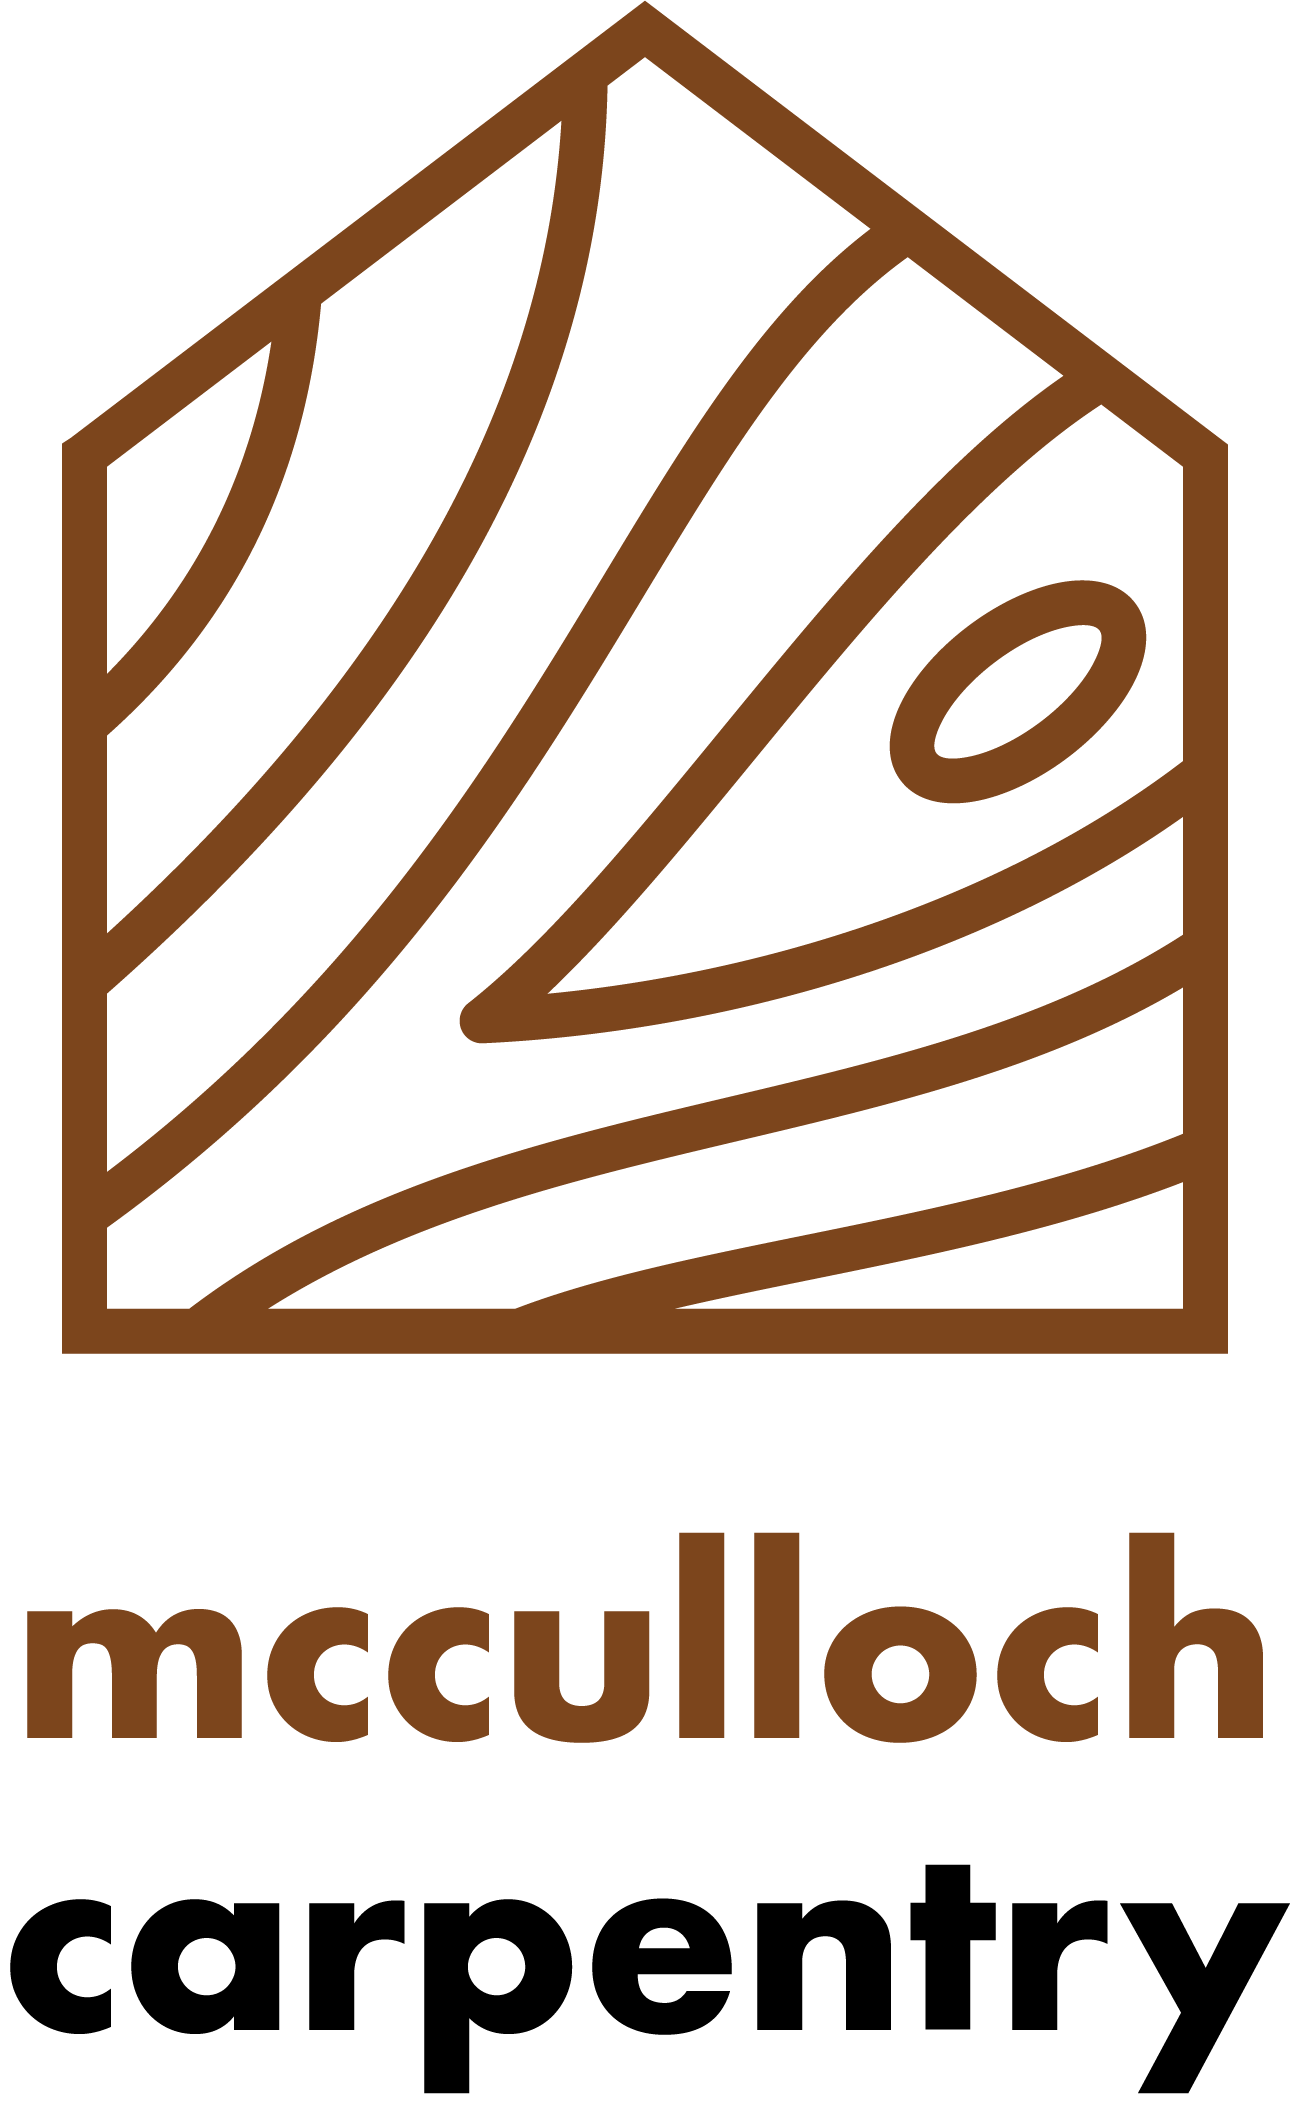 McCulloch Carpentry